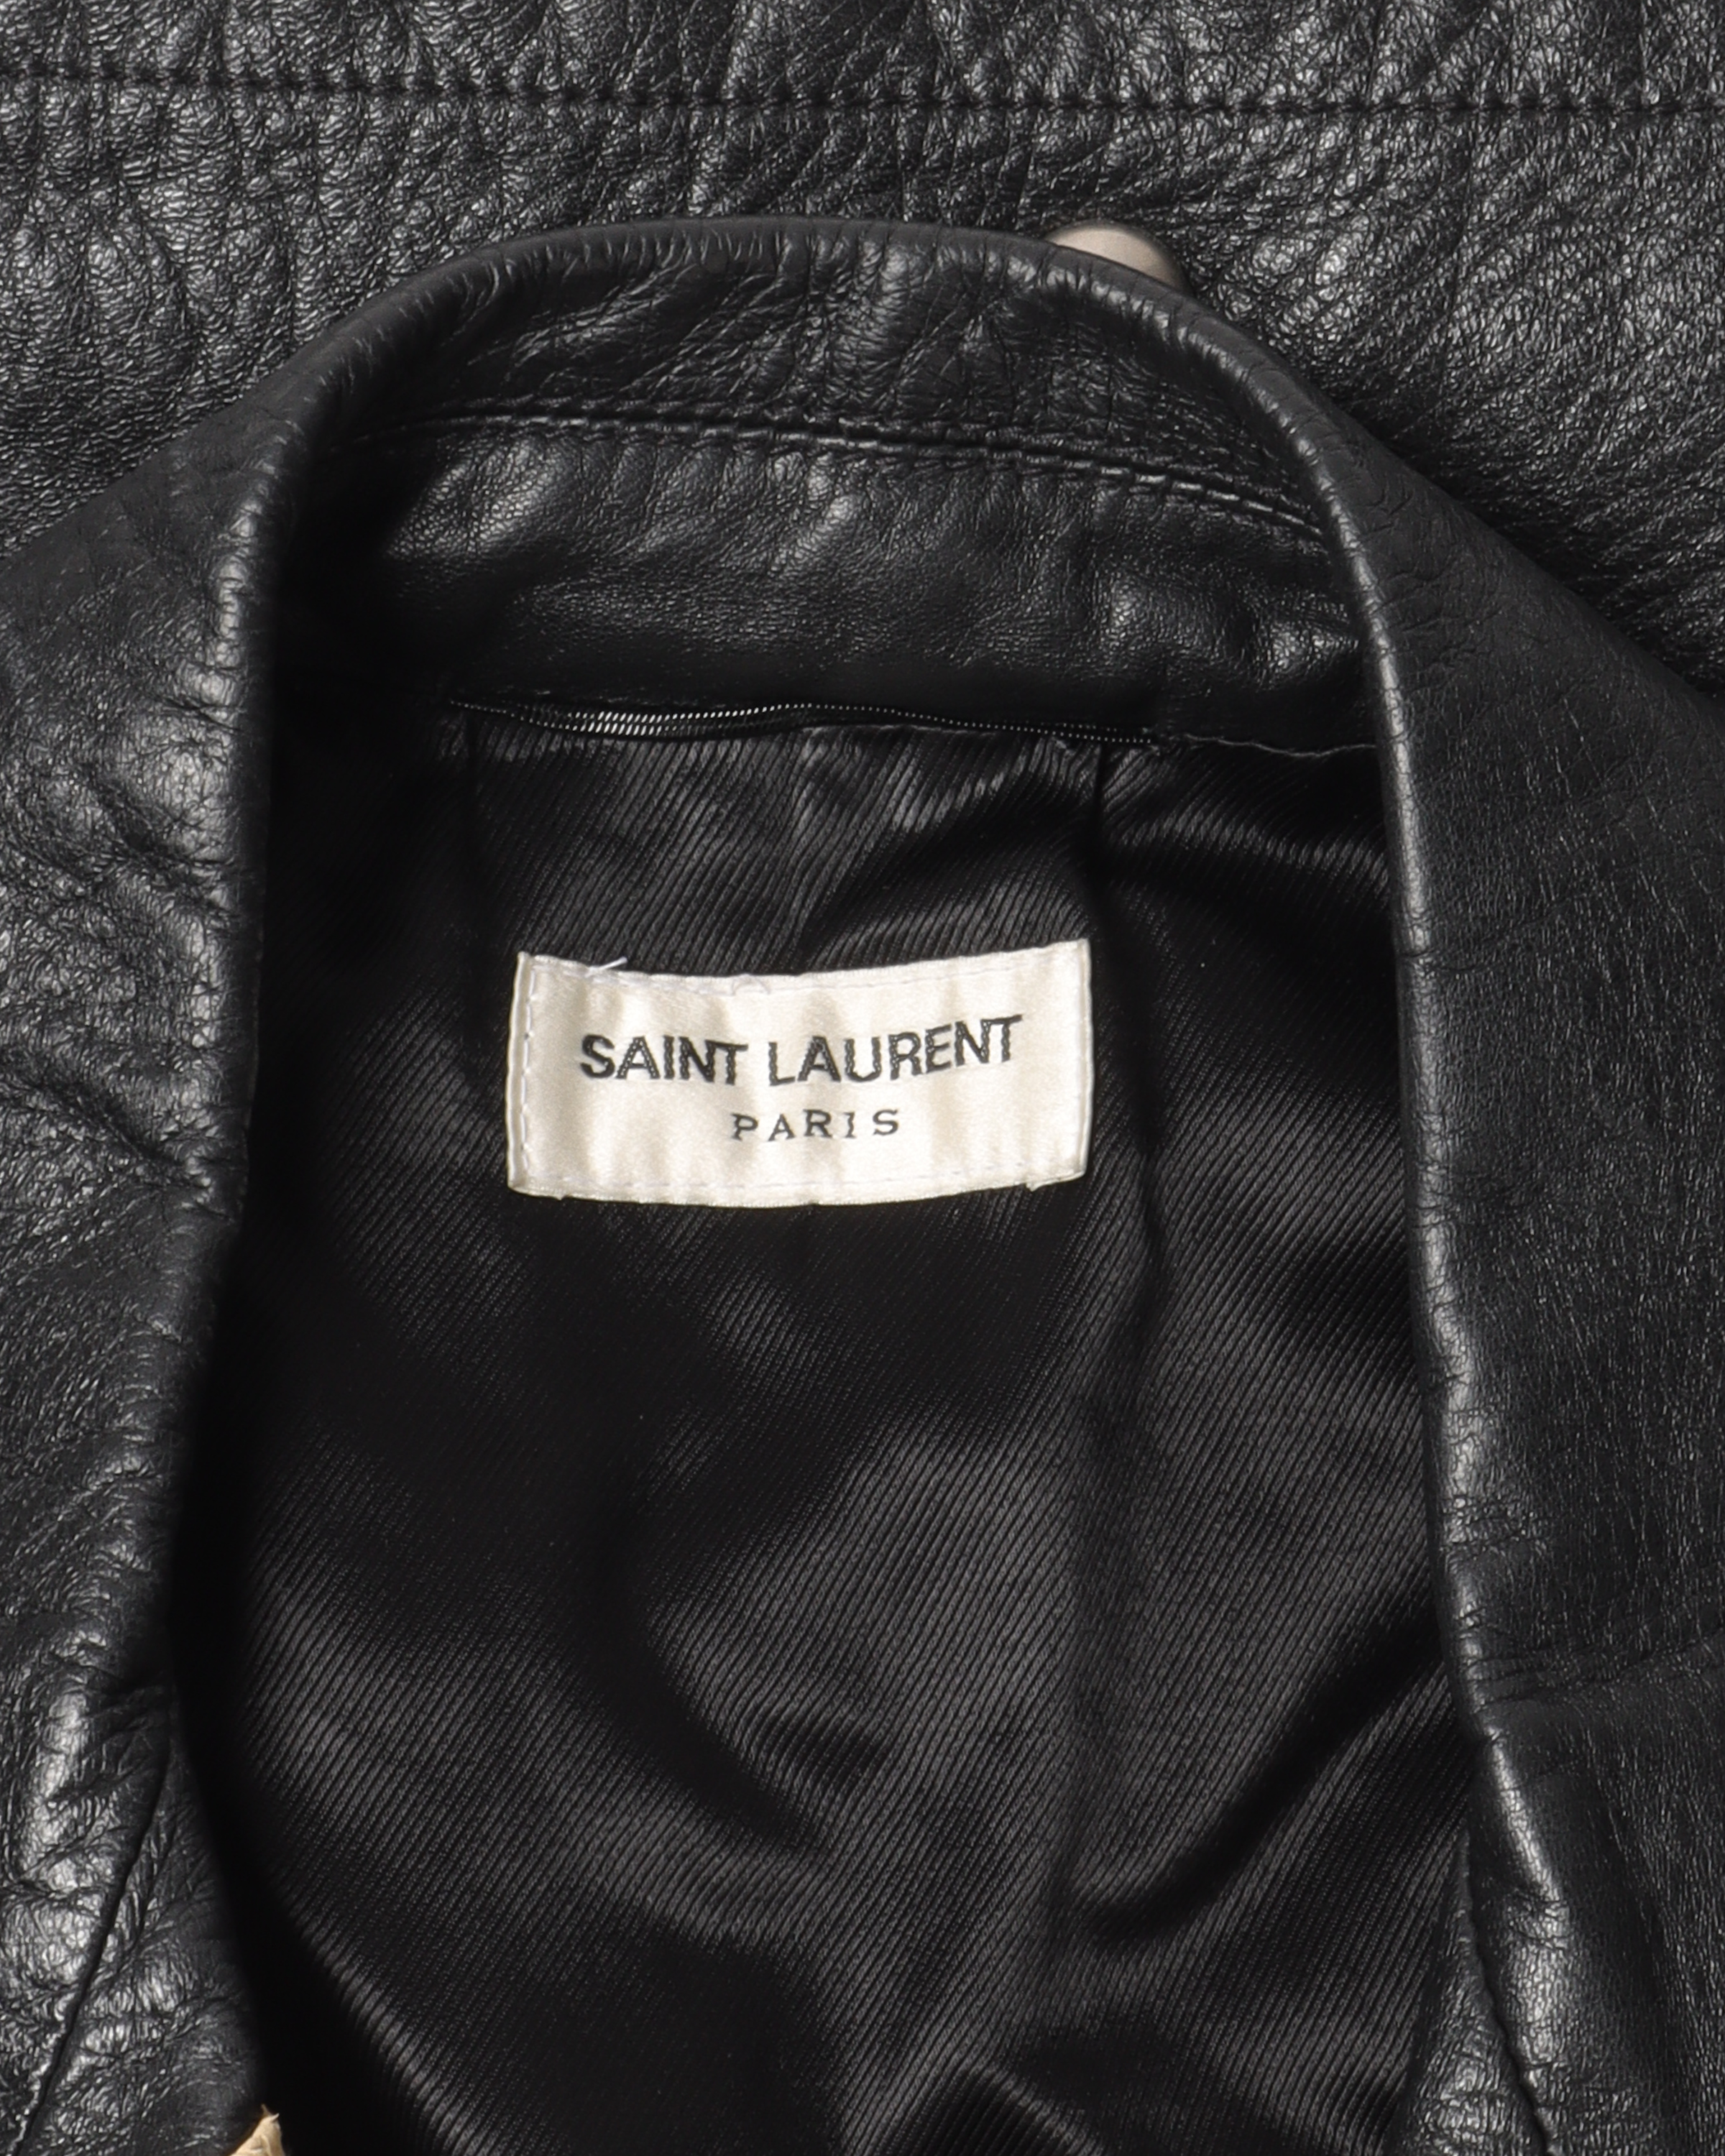 Guitar Leather Jacket